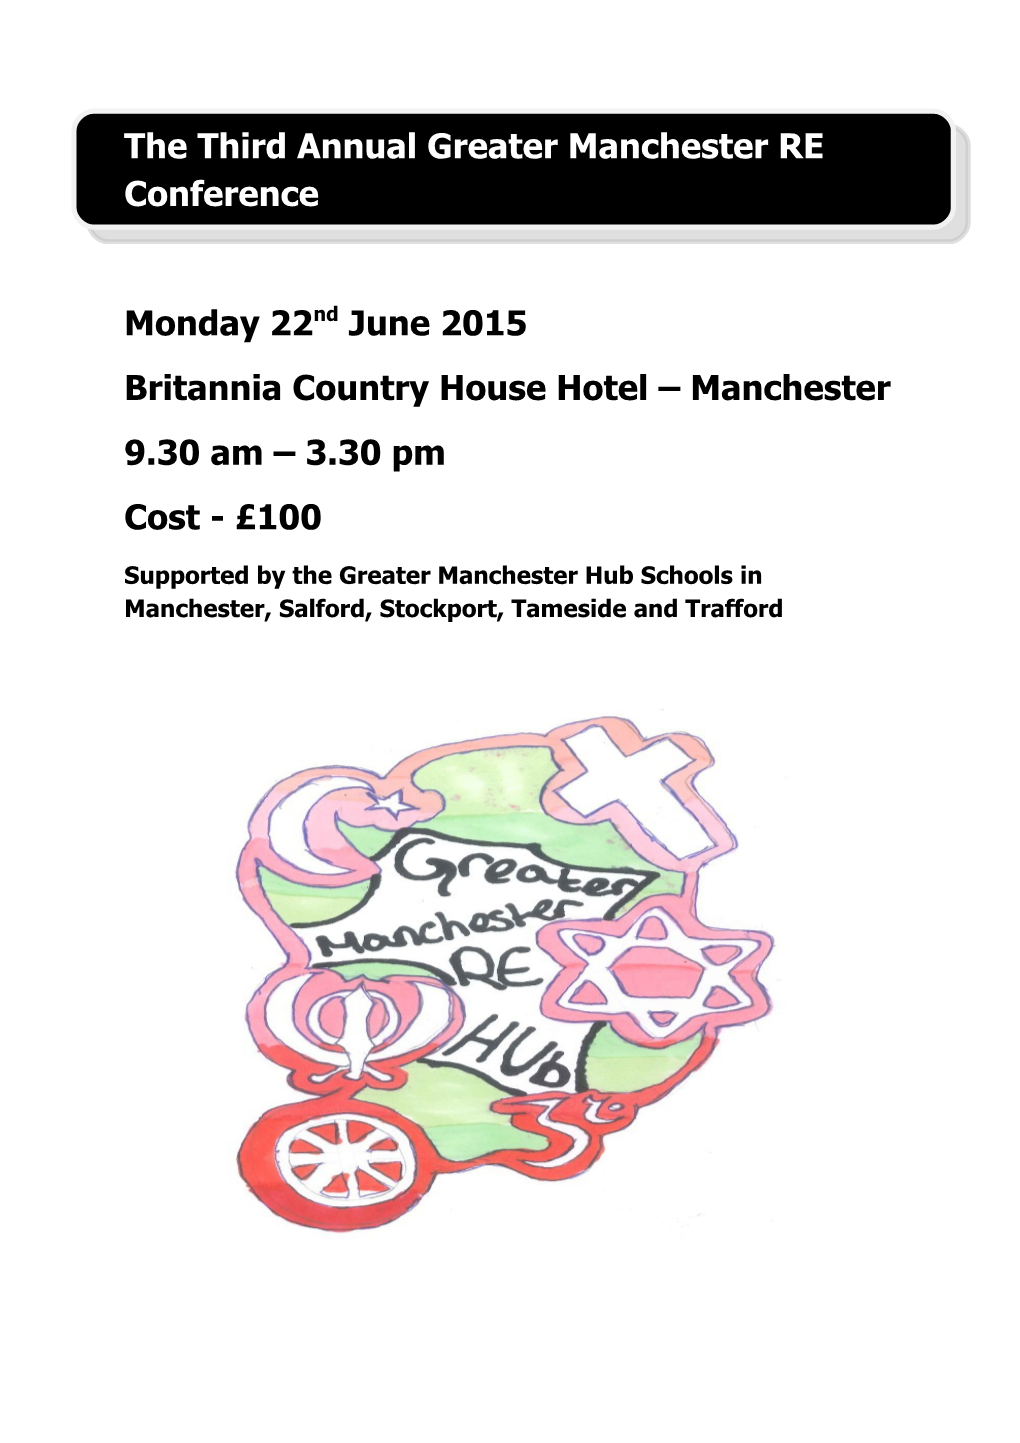 Britannia Country House Hotel Manchester